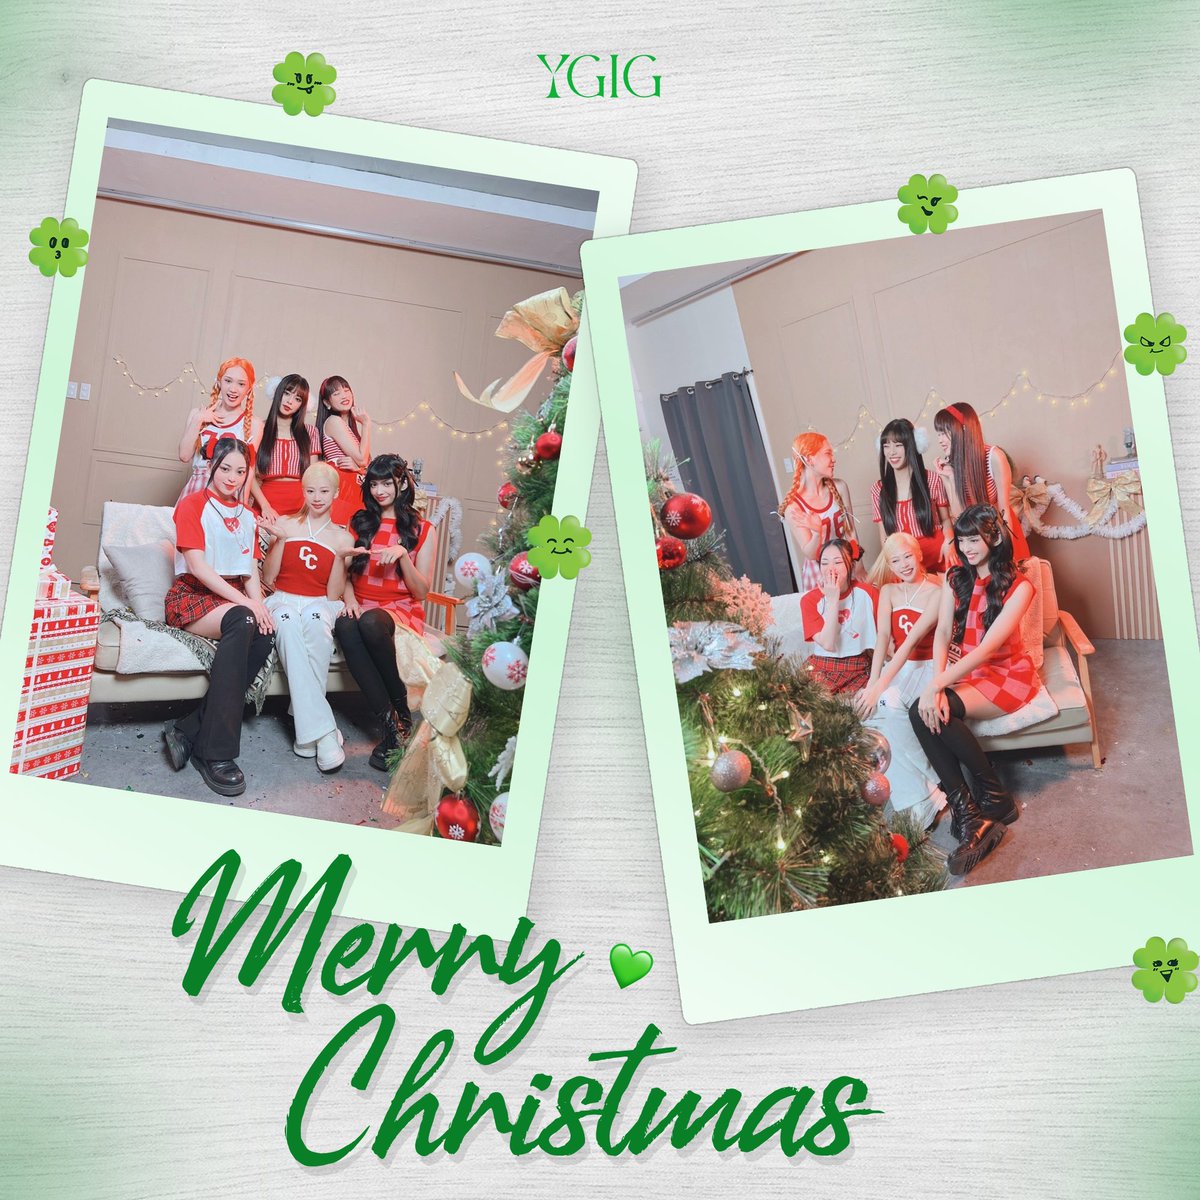 [🎄] Christmas with YGIG To WeGo: Maligayang Pasko po! 🍀 🎧 spoti.fi/3sFckgD #YGIG #MaligayaAngPasko #ChristmasWithYGIG